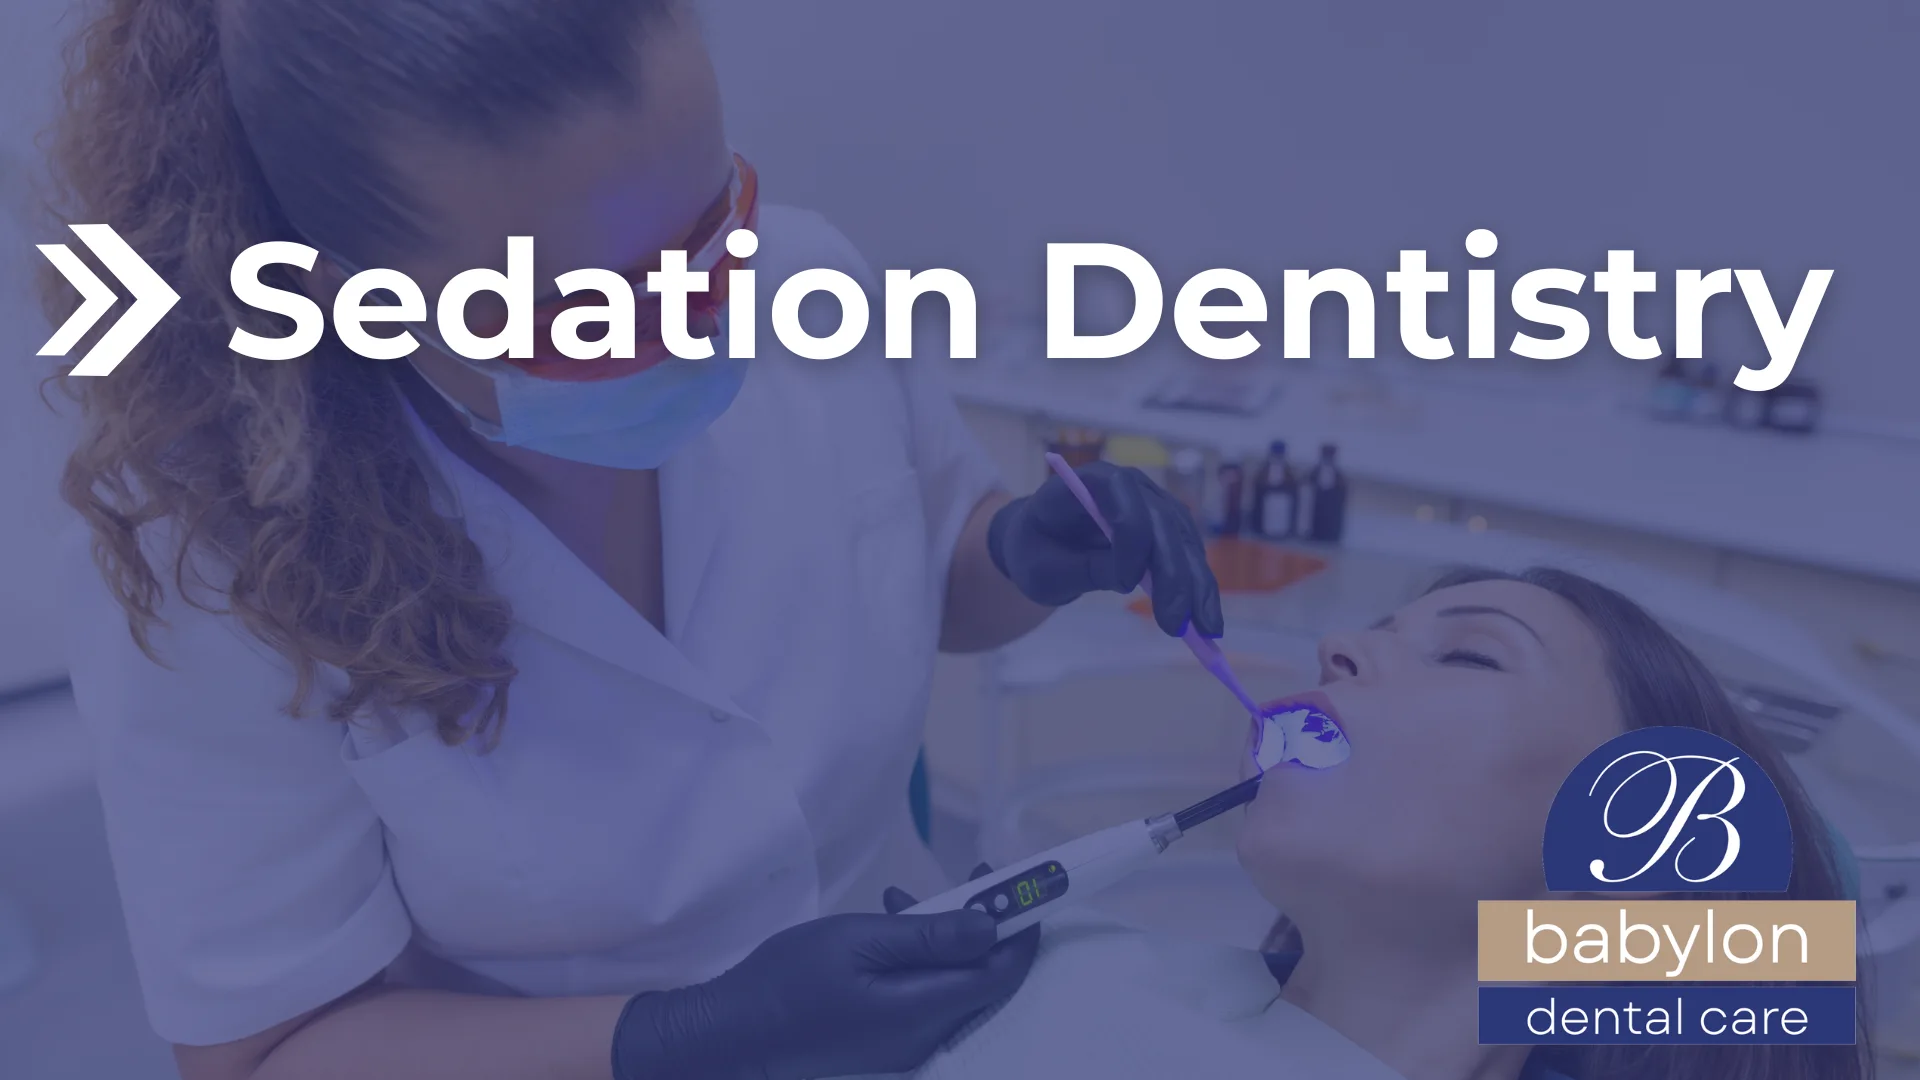 Sedation Dentistry Image - new logo